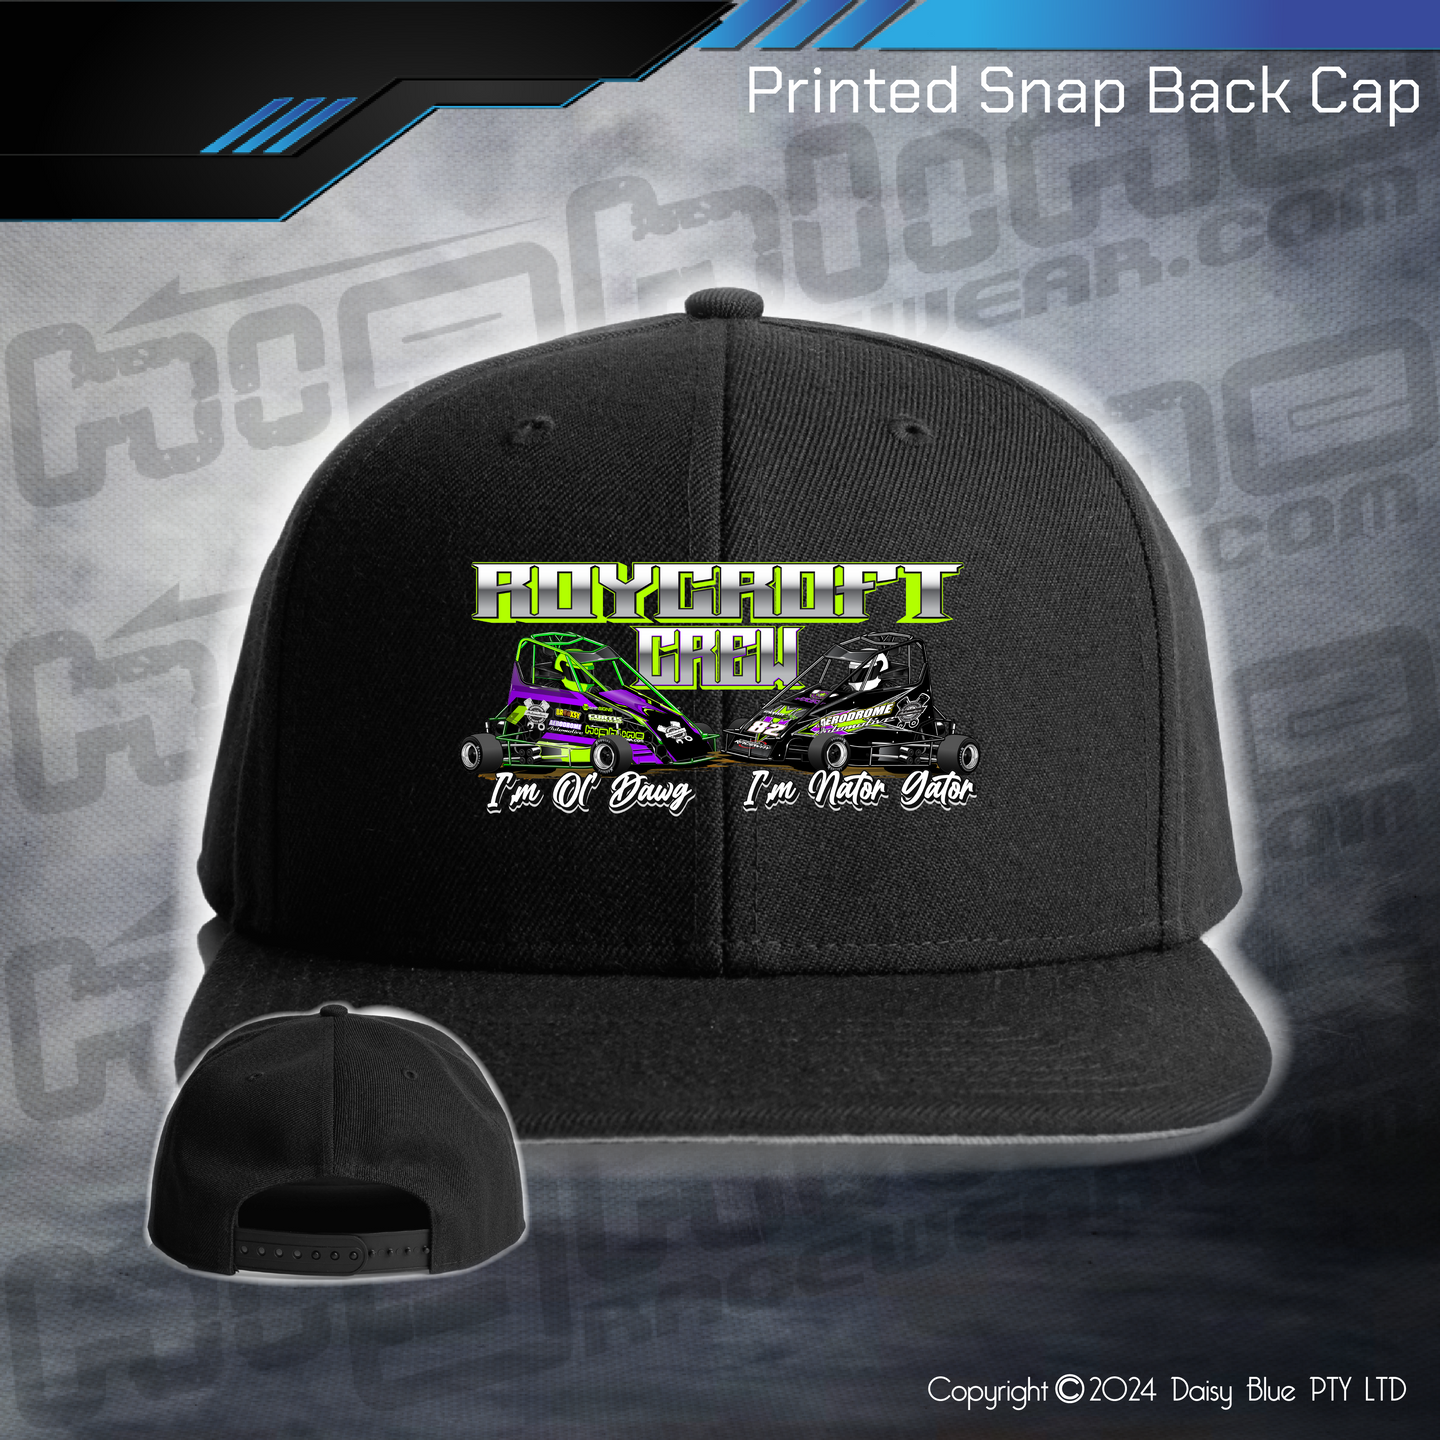 Printed Snap Back CAP - Roycroft Brothers